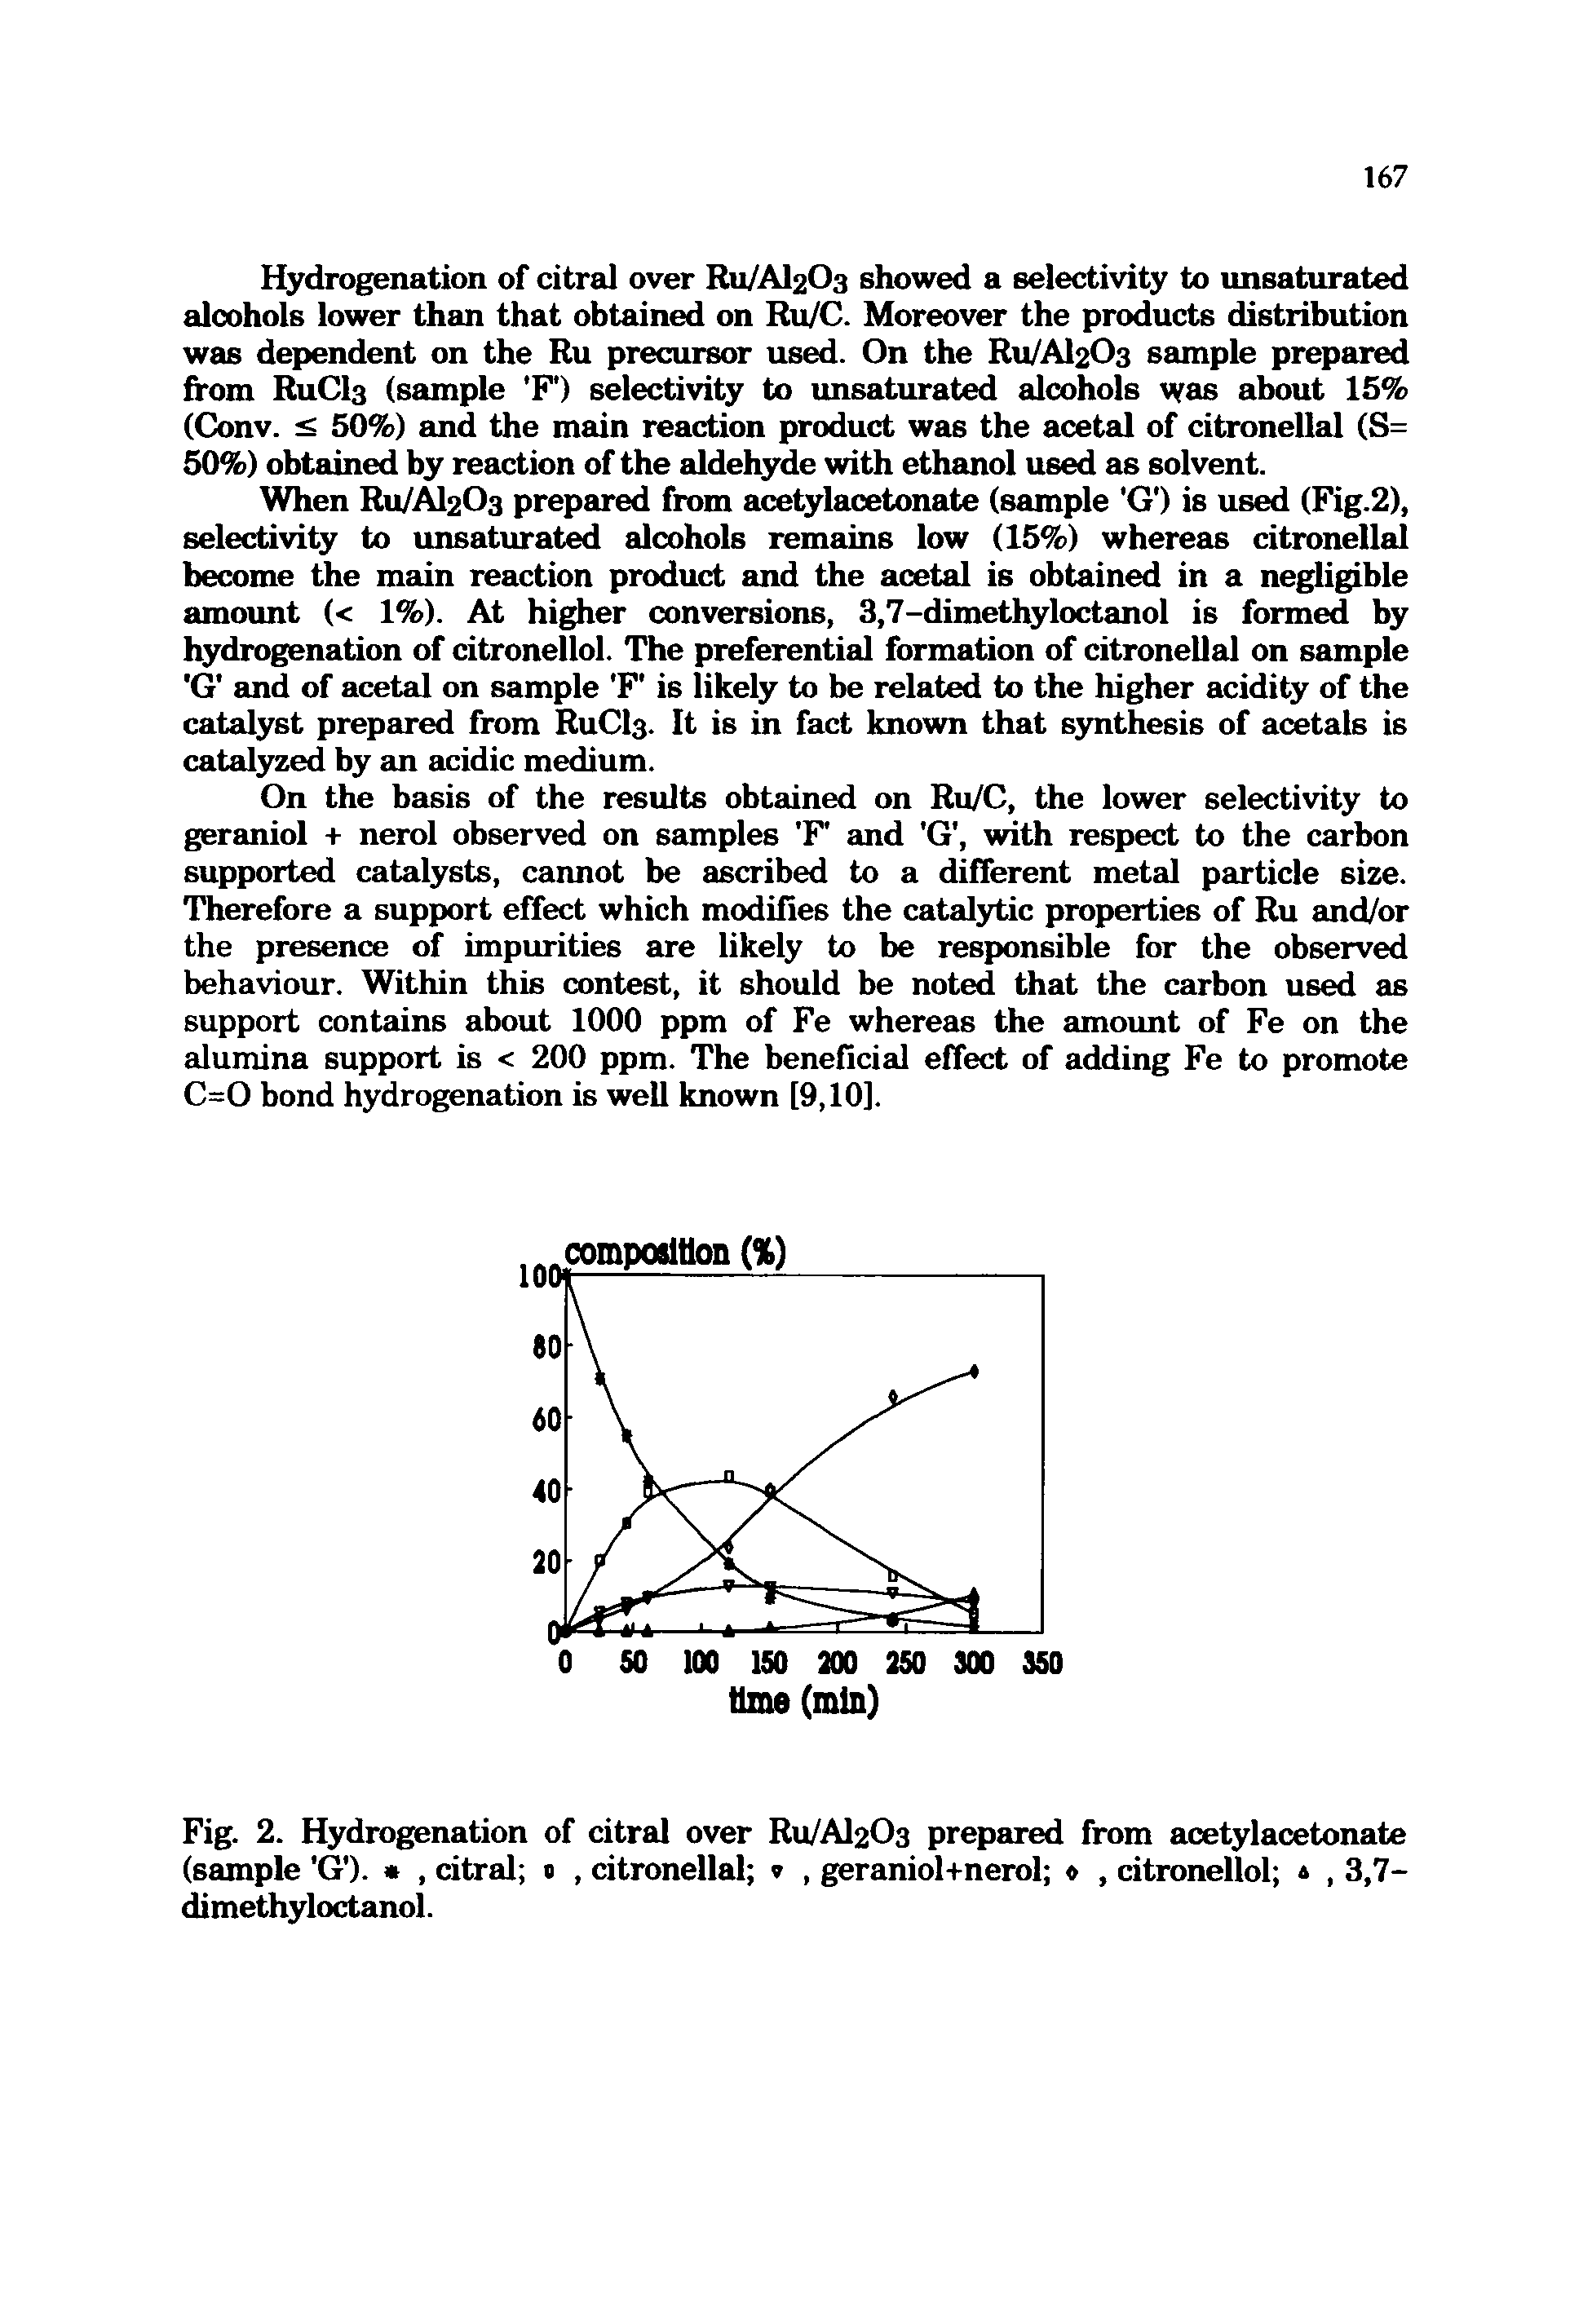 Fig. 2. Hydrogenation of citral over RU/AI2O3 prepared from acetylacetonate (sample G ). , citral , citronellal , geraniol+nerol , citronellol 4, 3,7-dimethyloctanol.